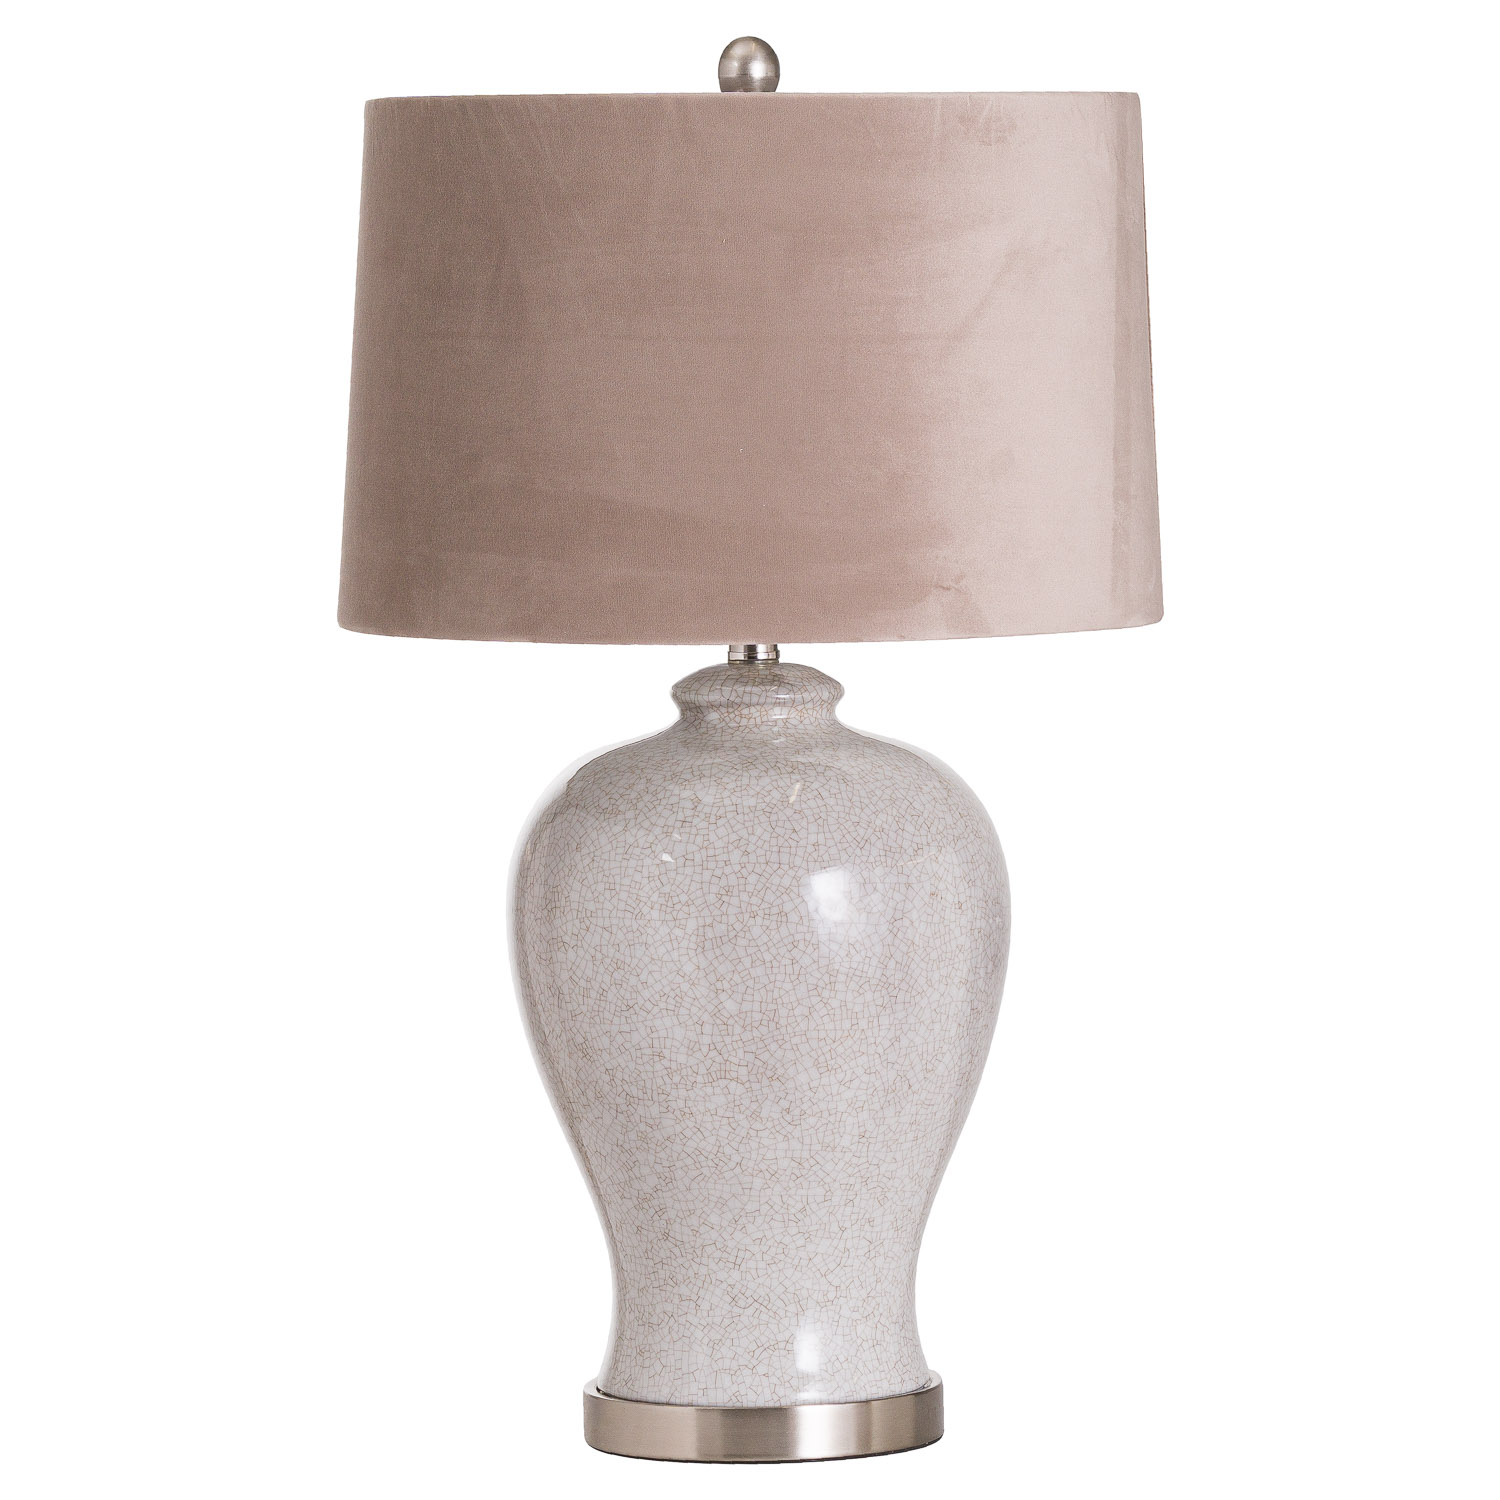 Hadley Ceramic Table Lamp With Natural Shade - Image 1